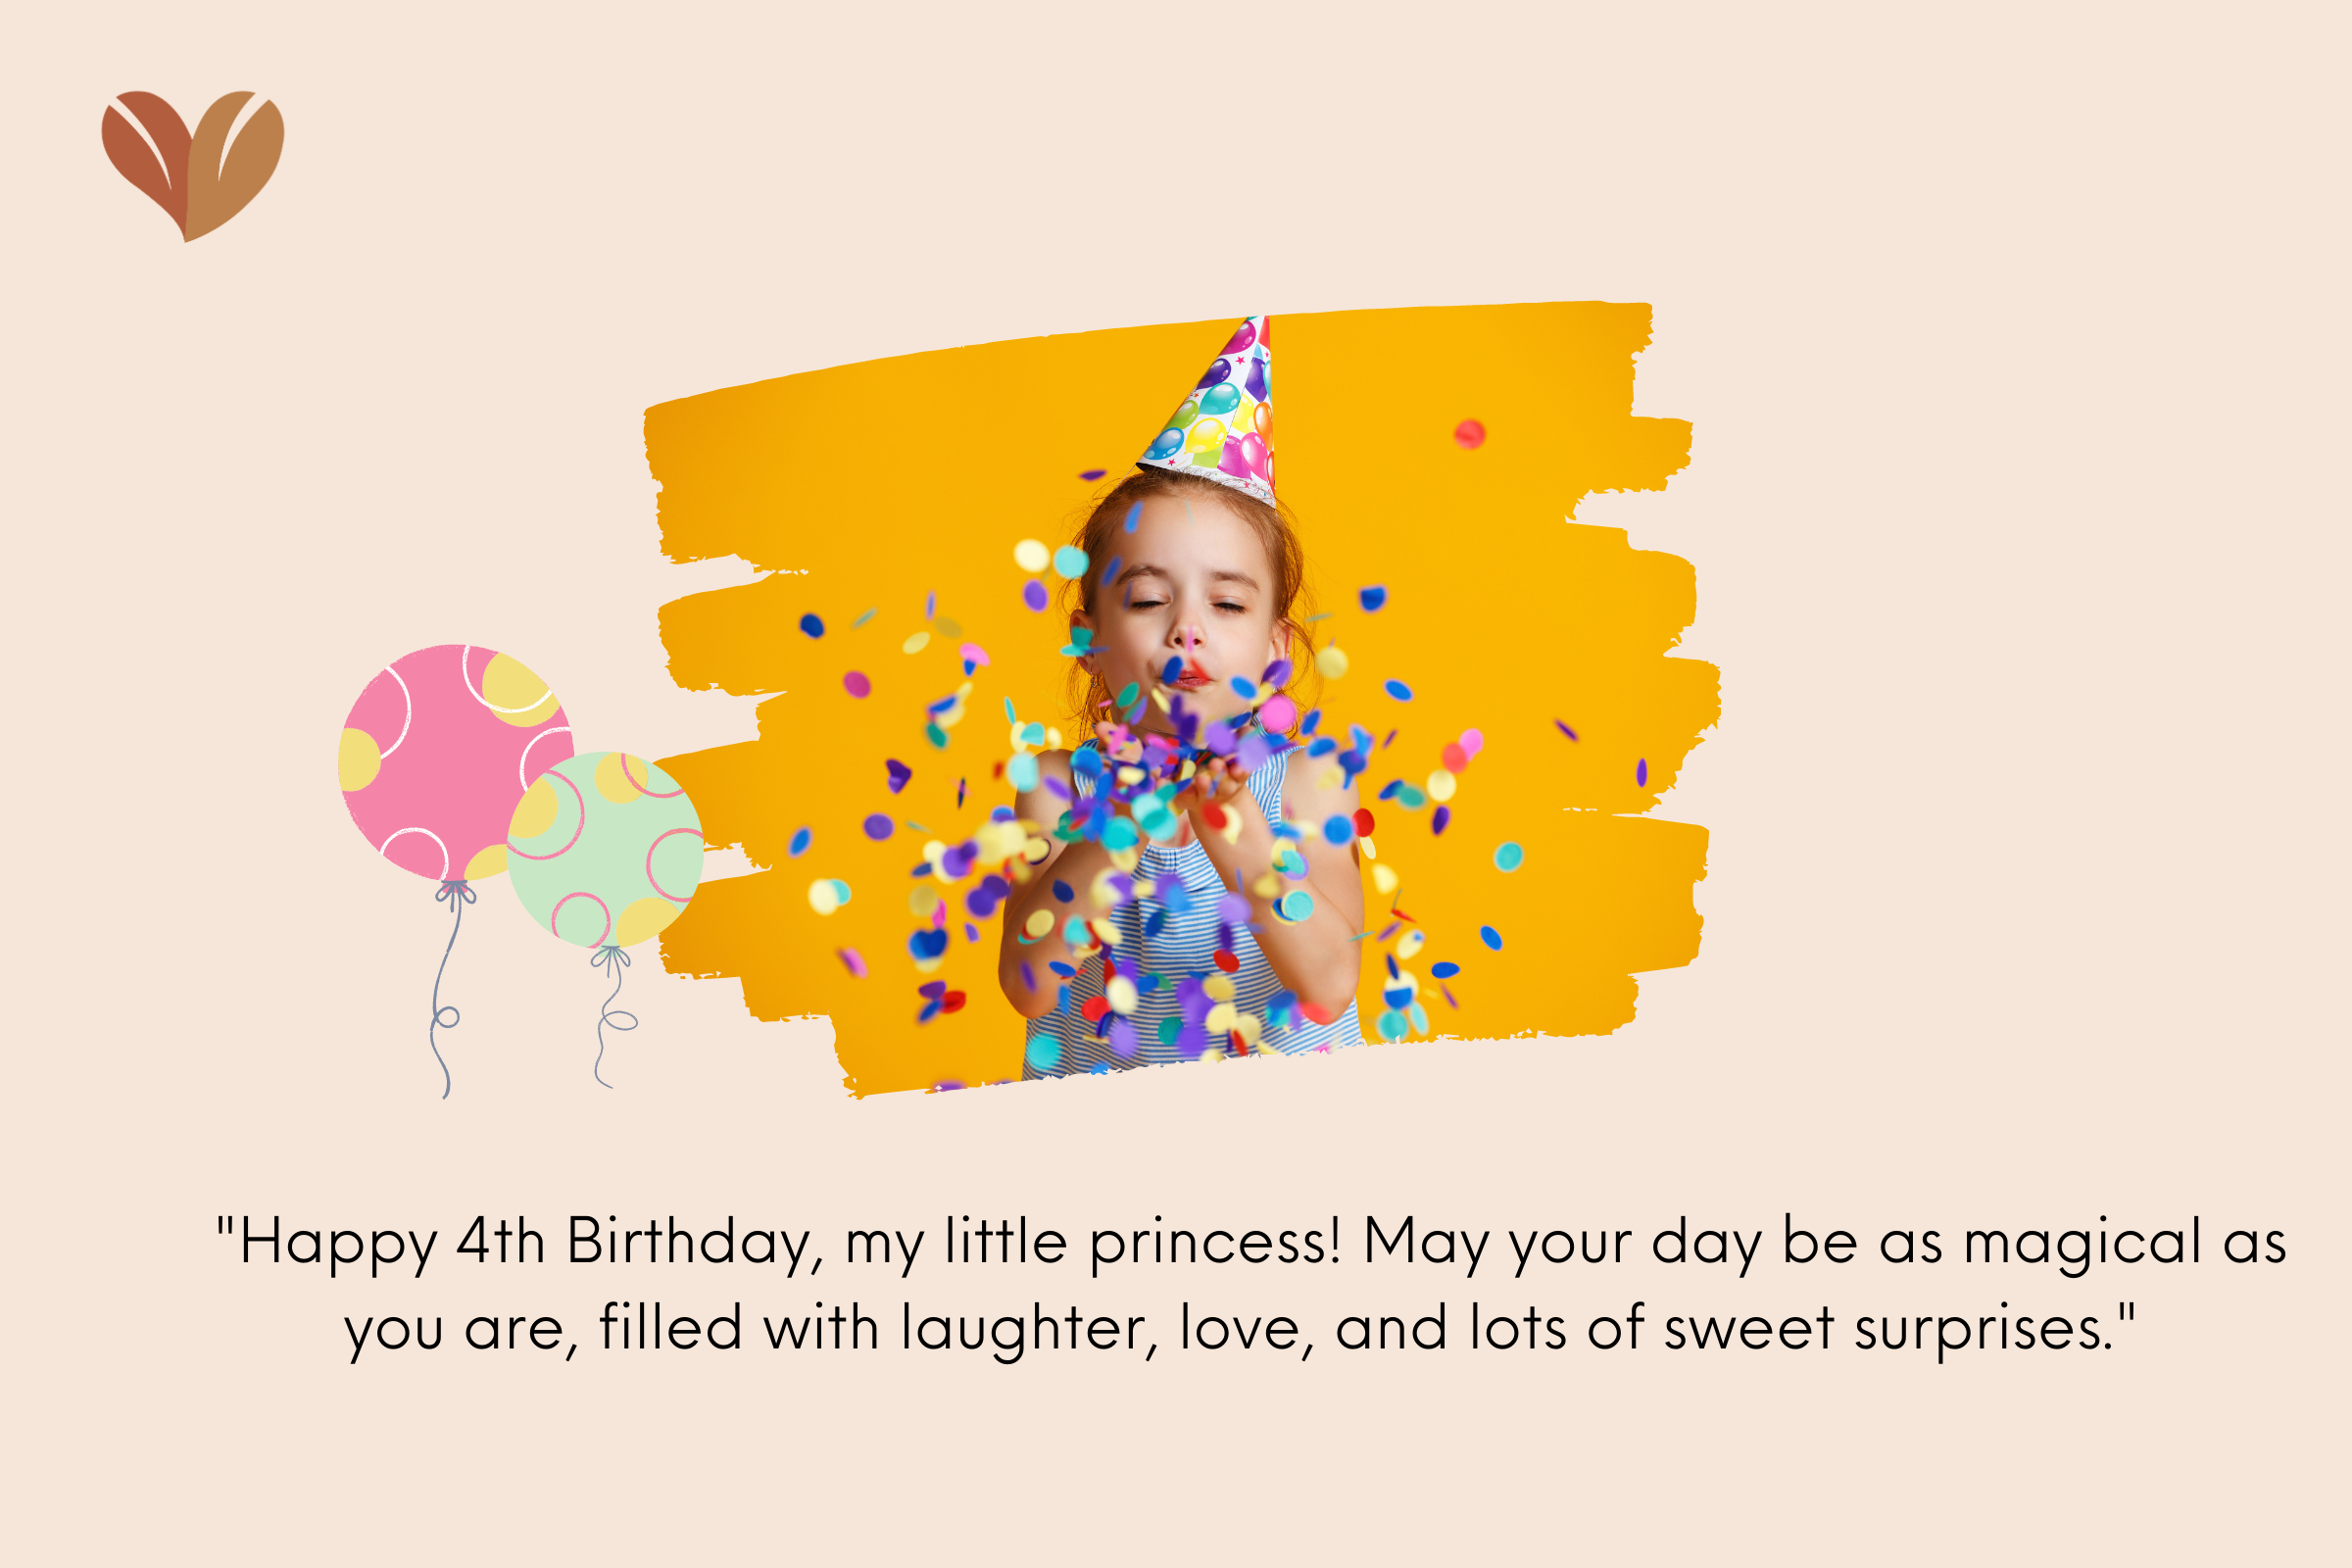 Heartfelt 4th birthday wishes